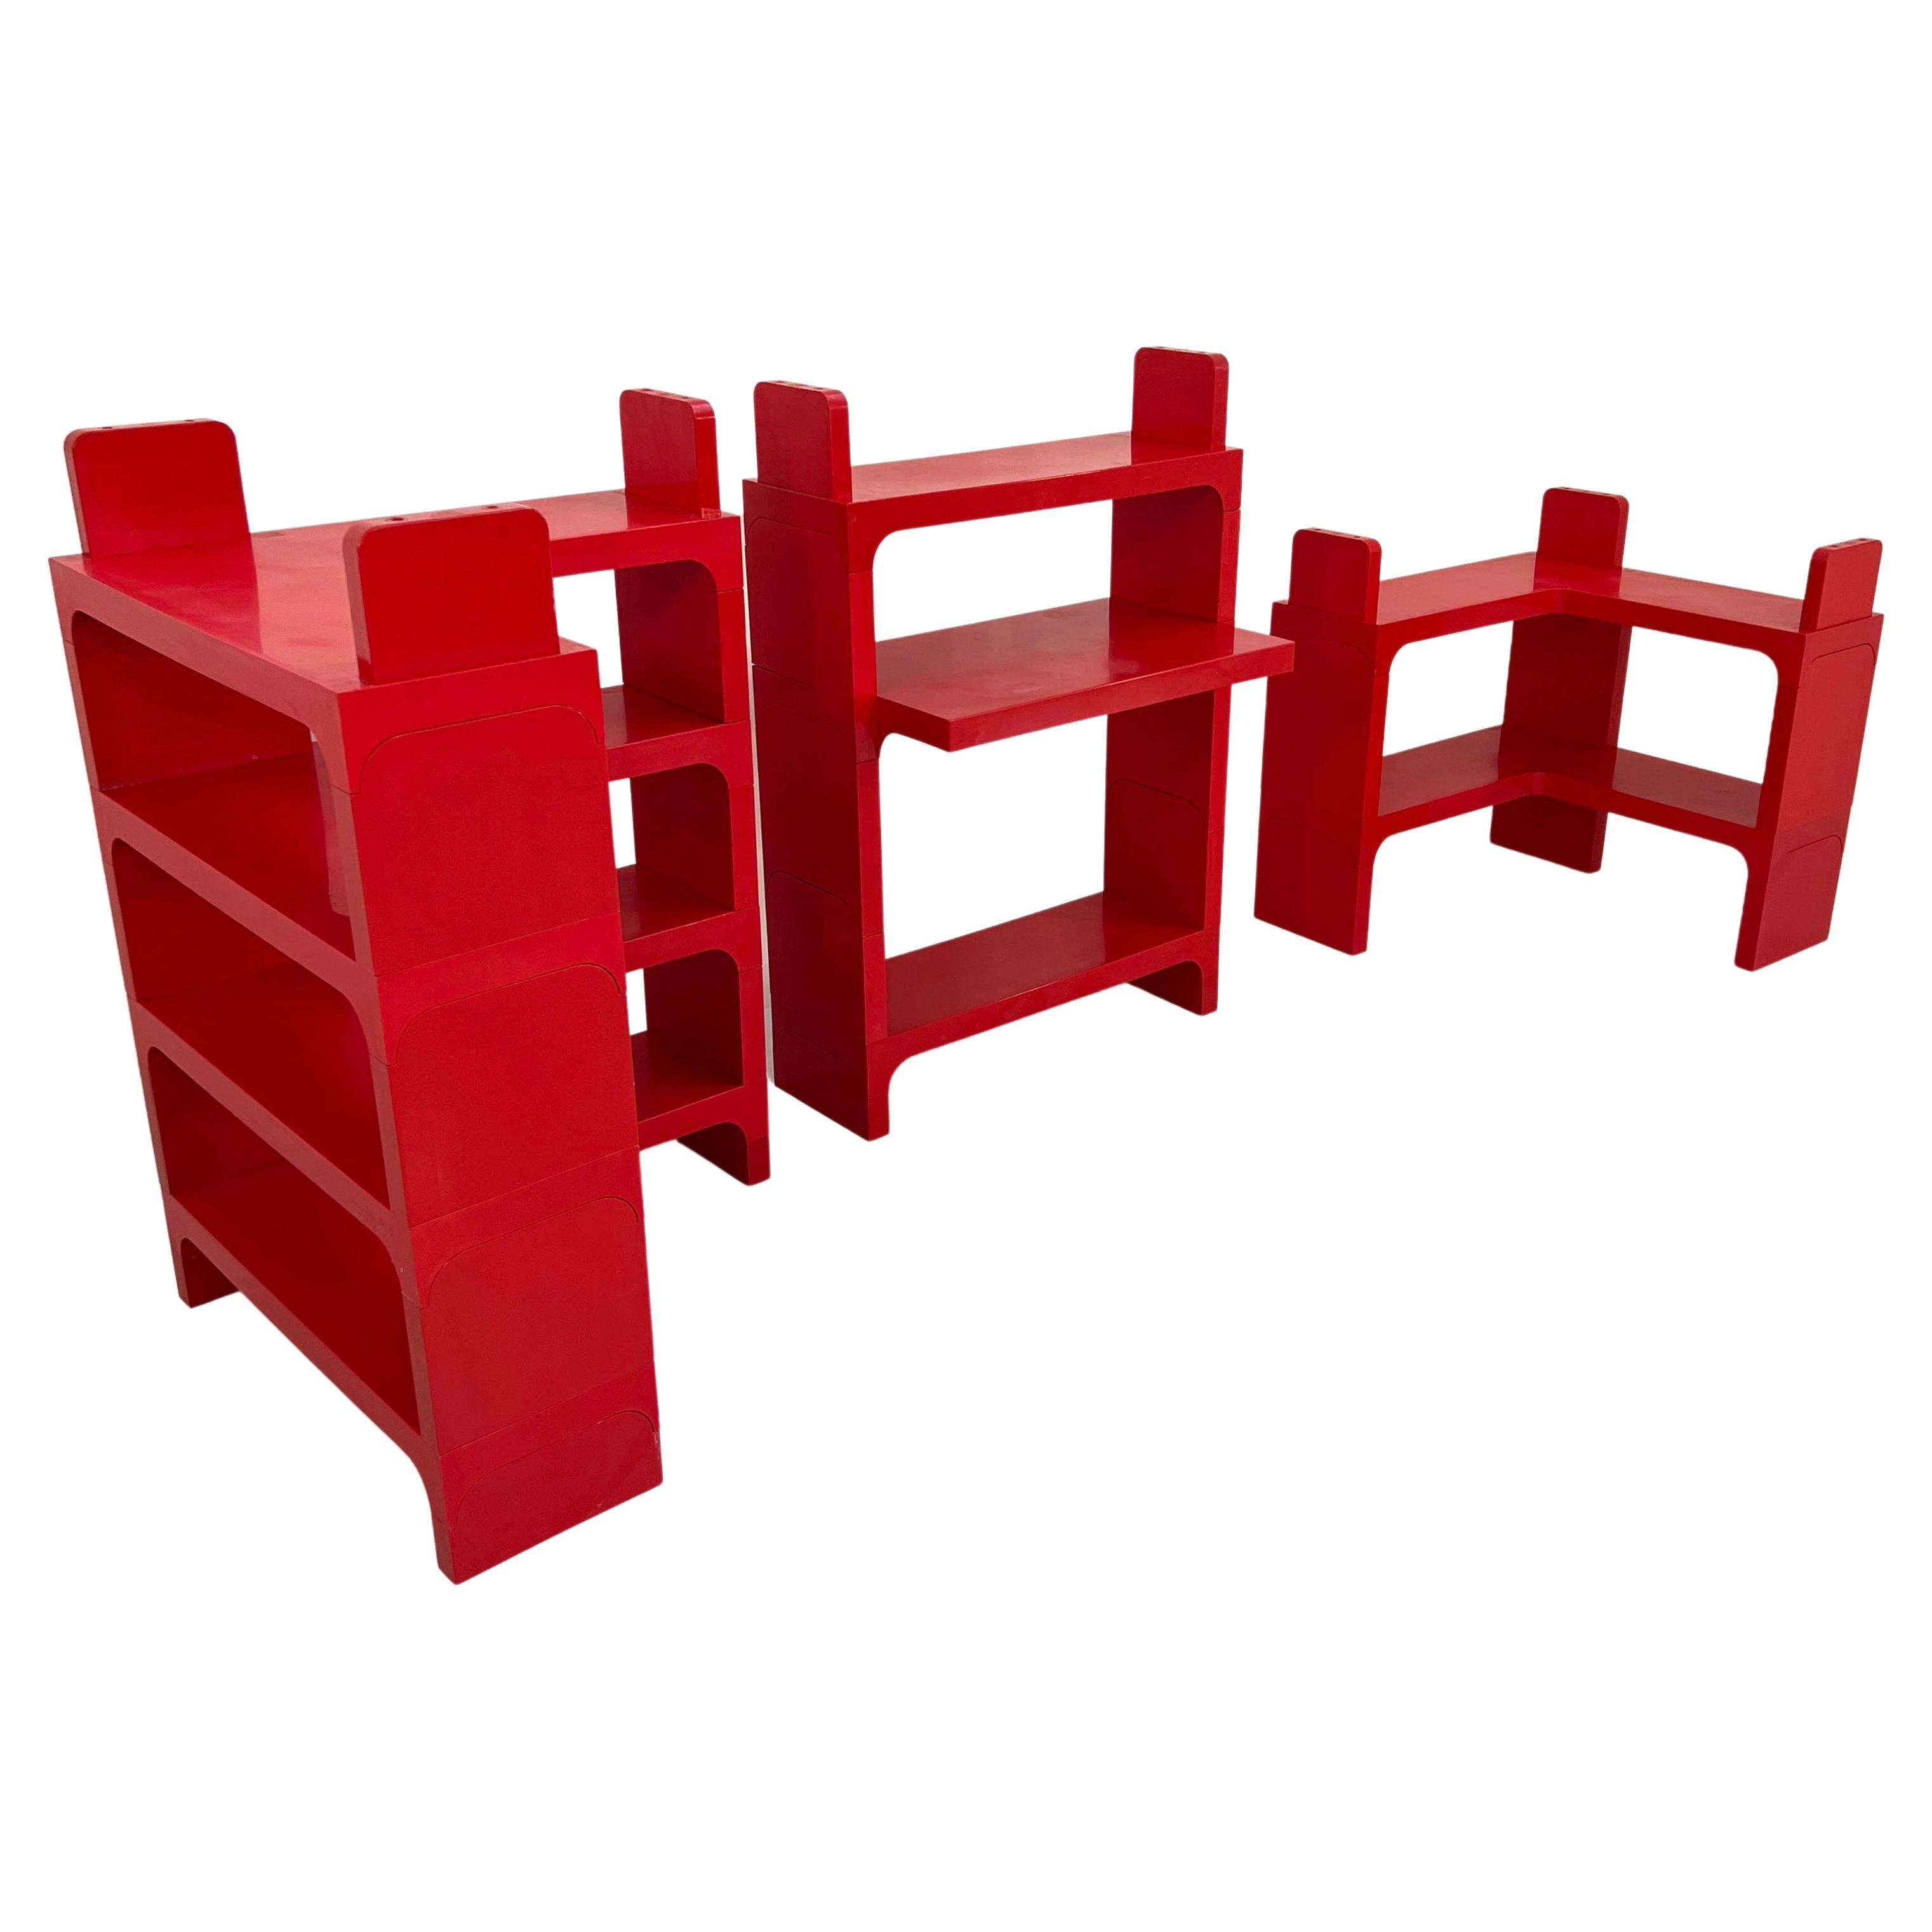 Red Modular Shelf with Desk by Olaf von Bohr for Kartell, 1970s